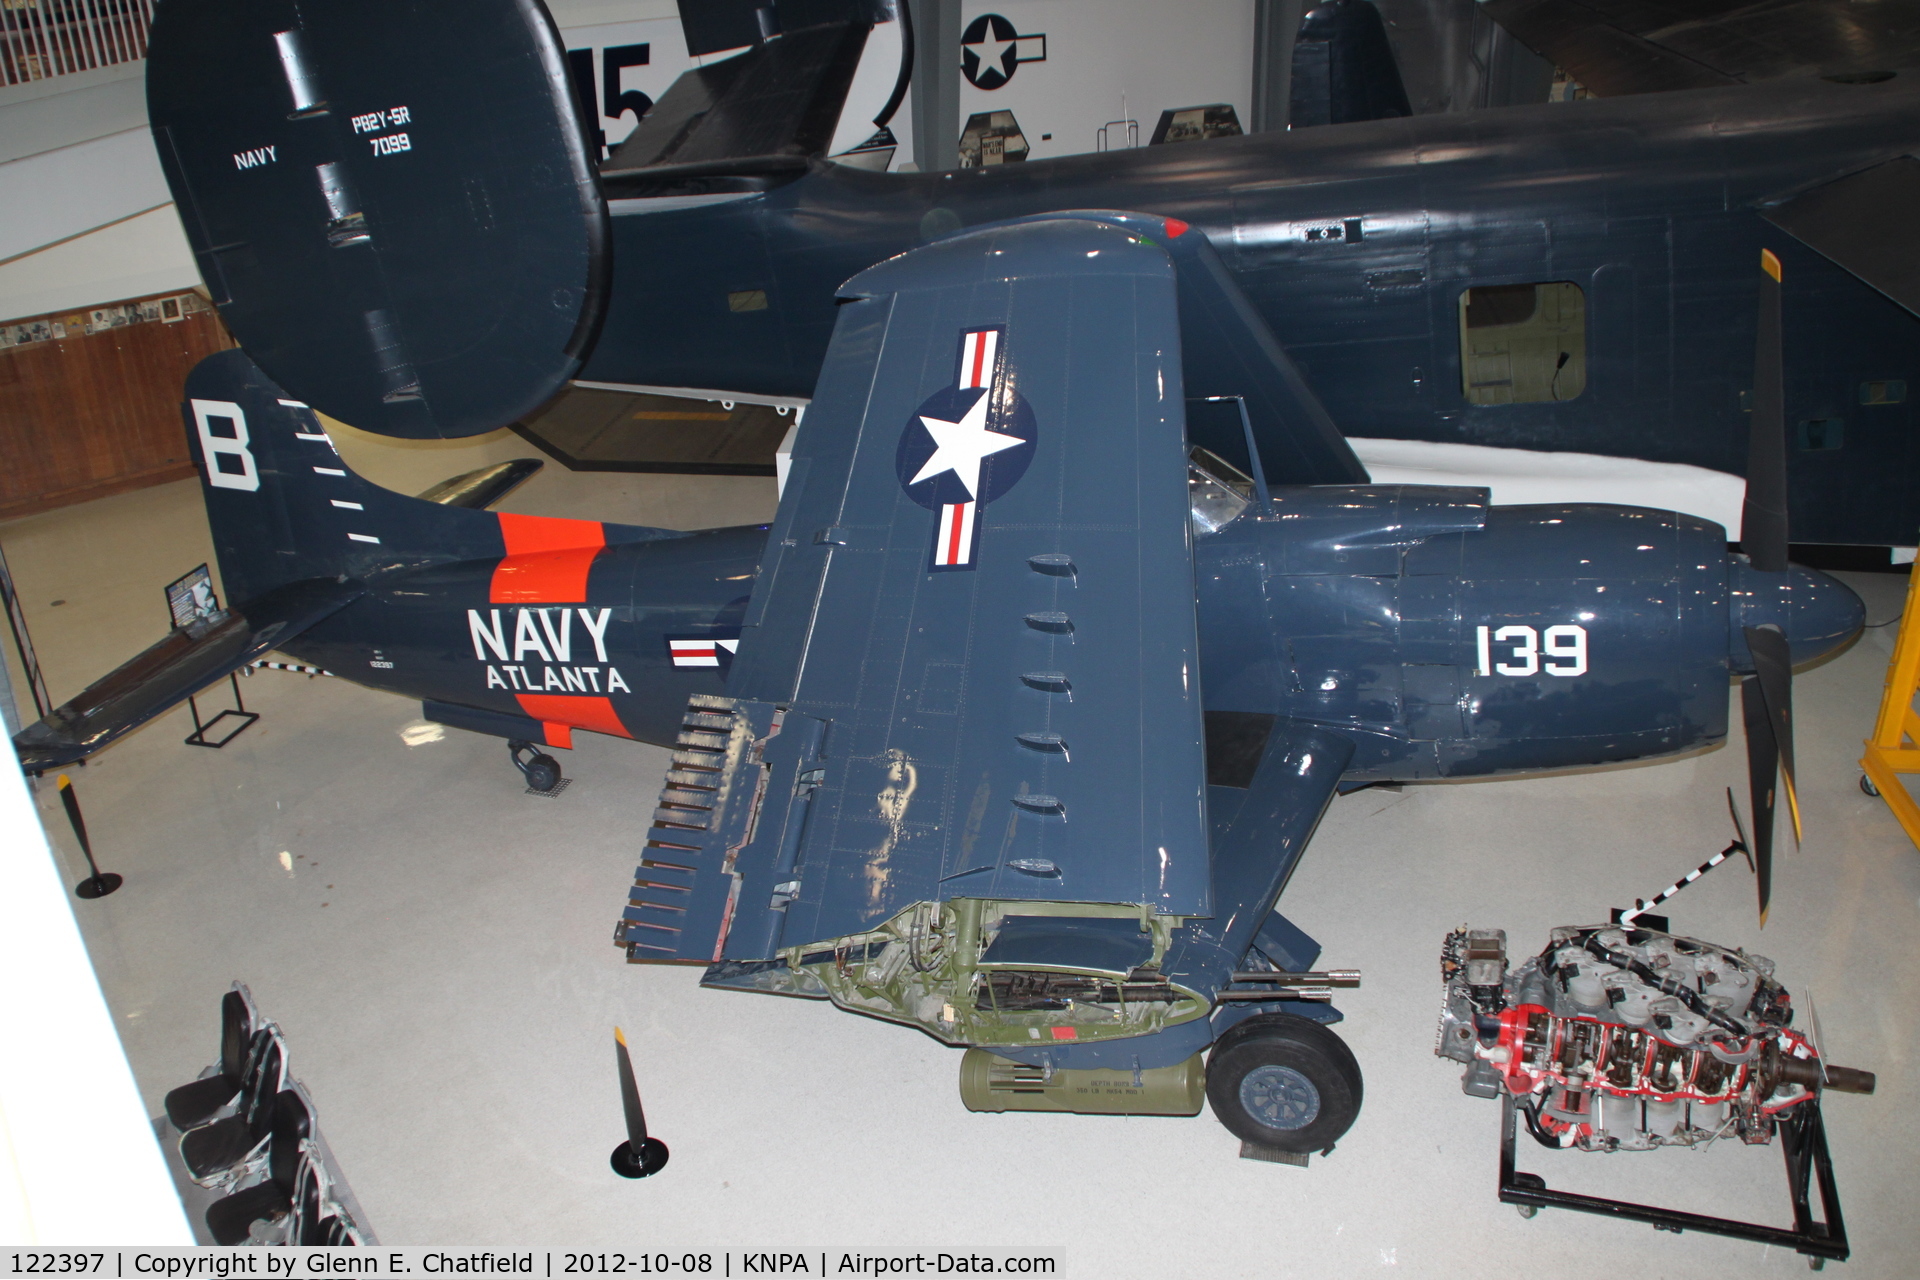 122397, 1947 Martin AM-1 Mauler C/N Not found 122397, Naval Aviation Museum